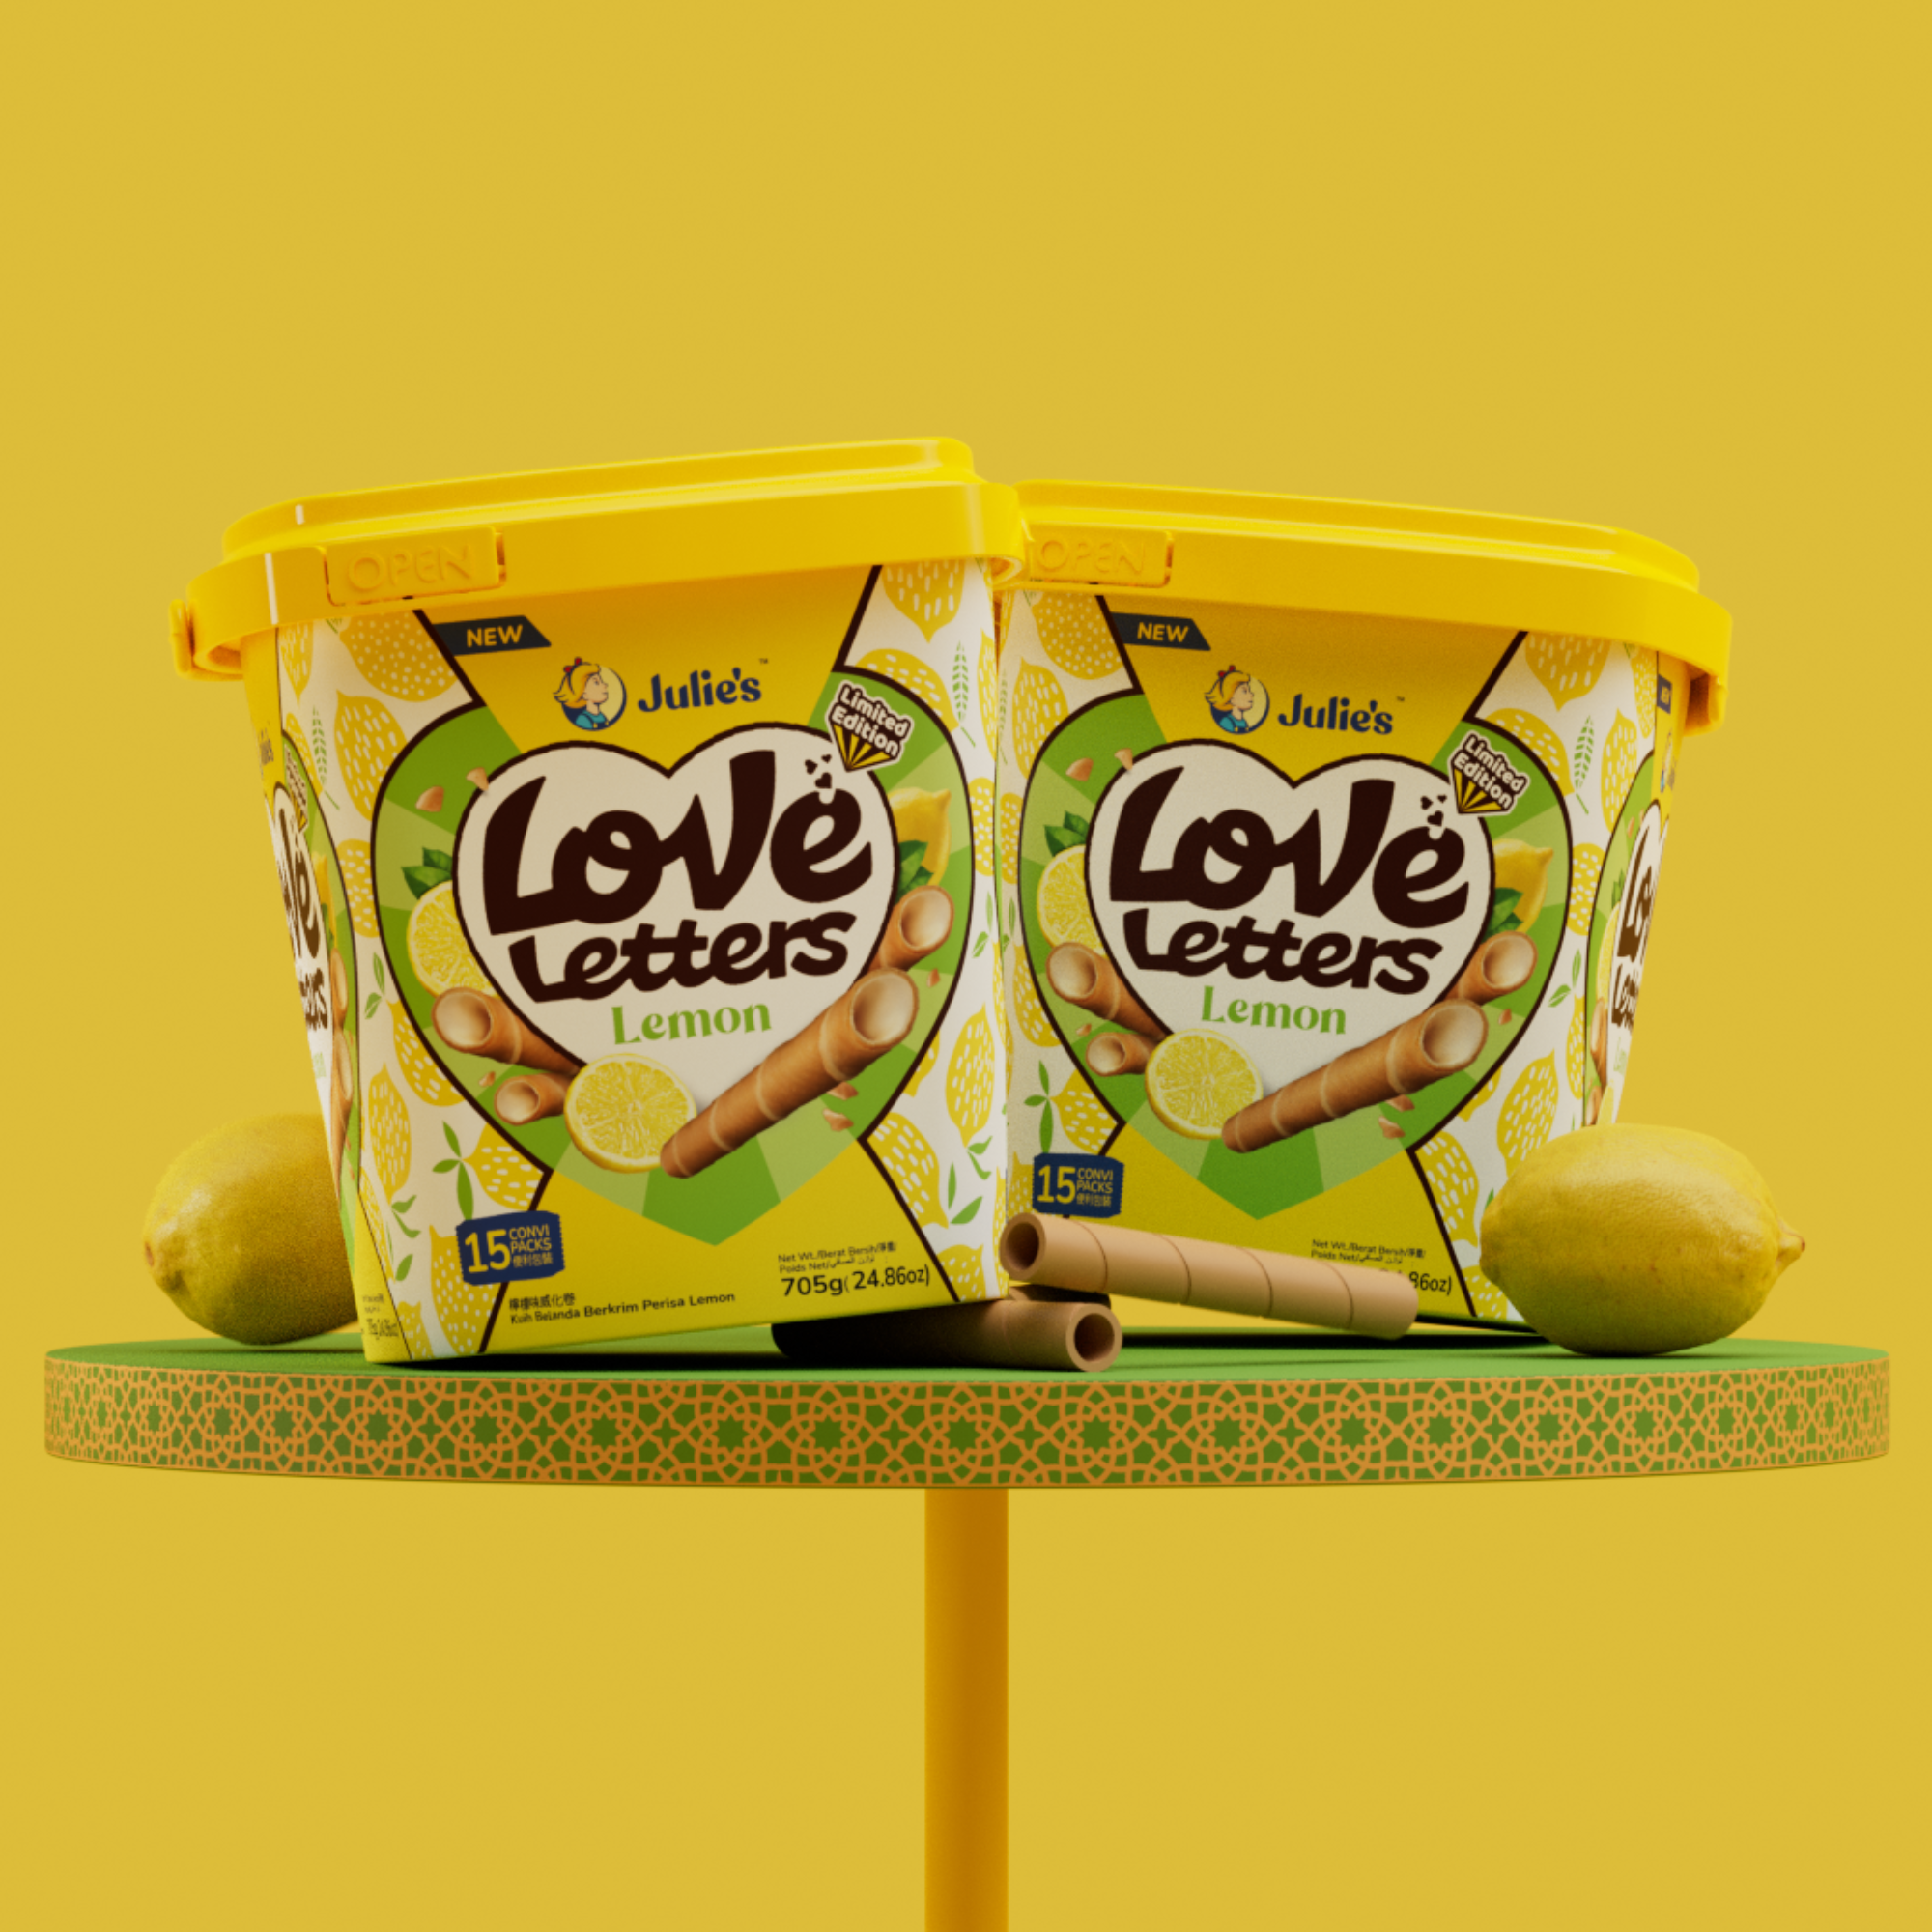 Julie's Love Letters Lemon 705g x 2 tubs